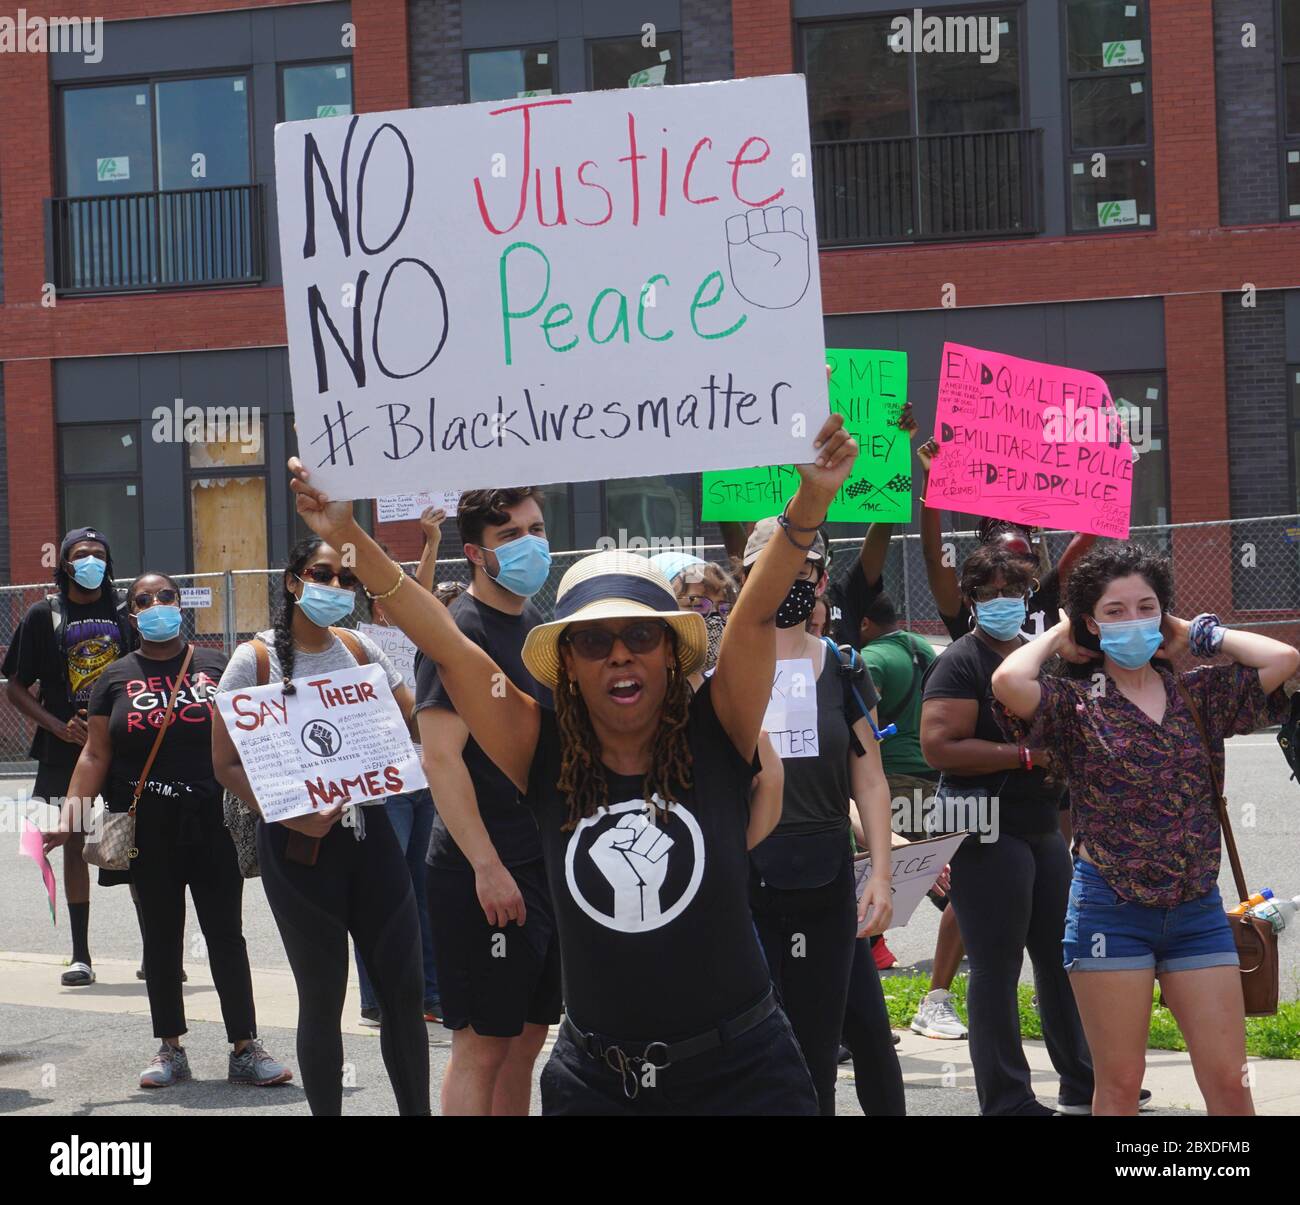 George Floyd protesta - No Justice No Peace - Hackensack, New Jersey, USA - 6 giugno 2020 Foto Stock